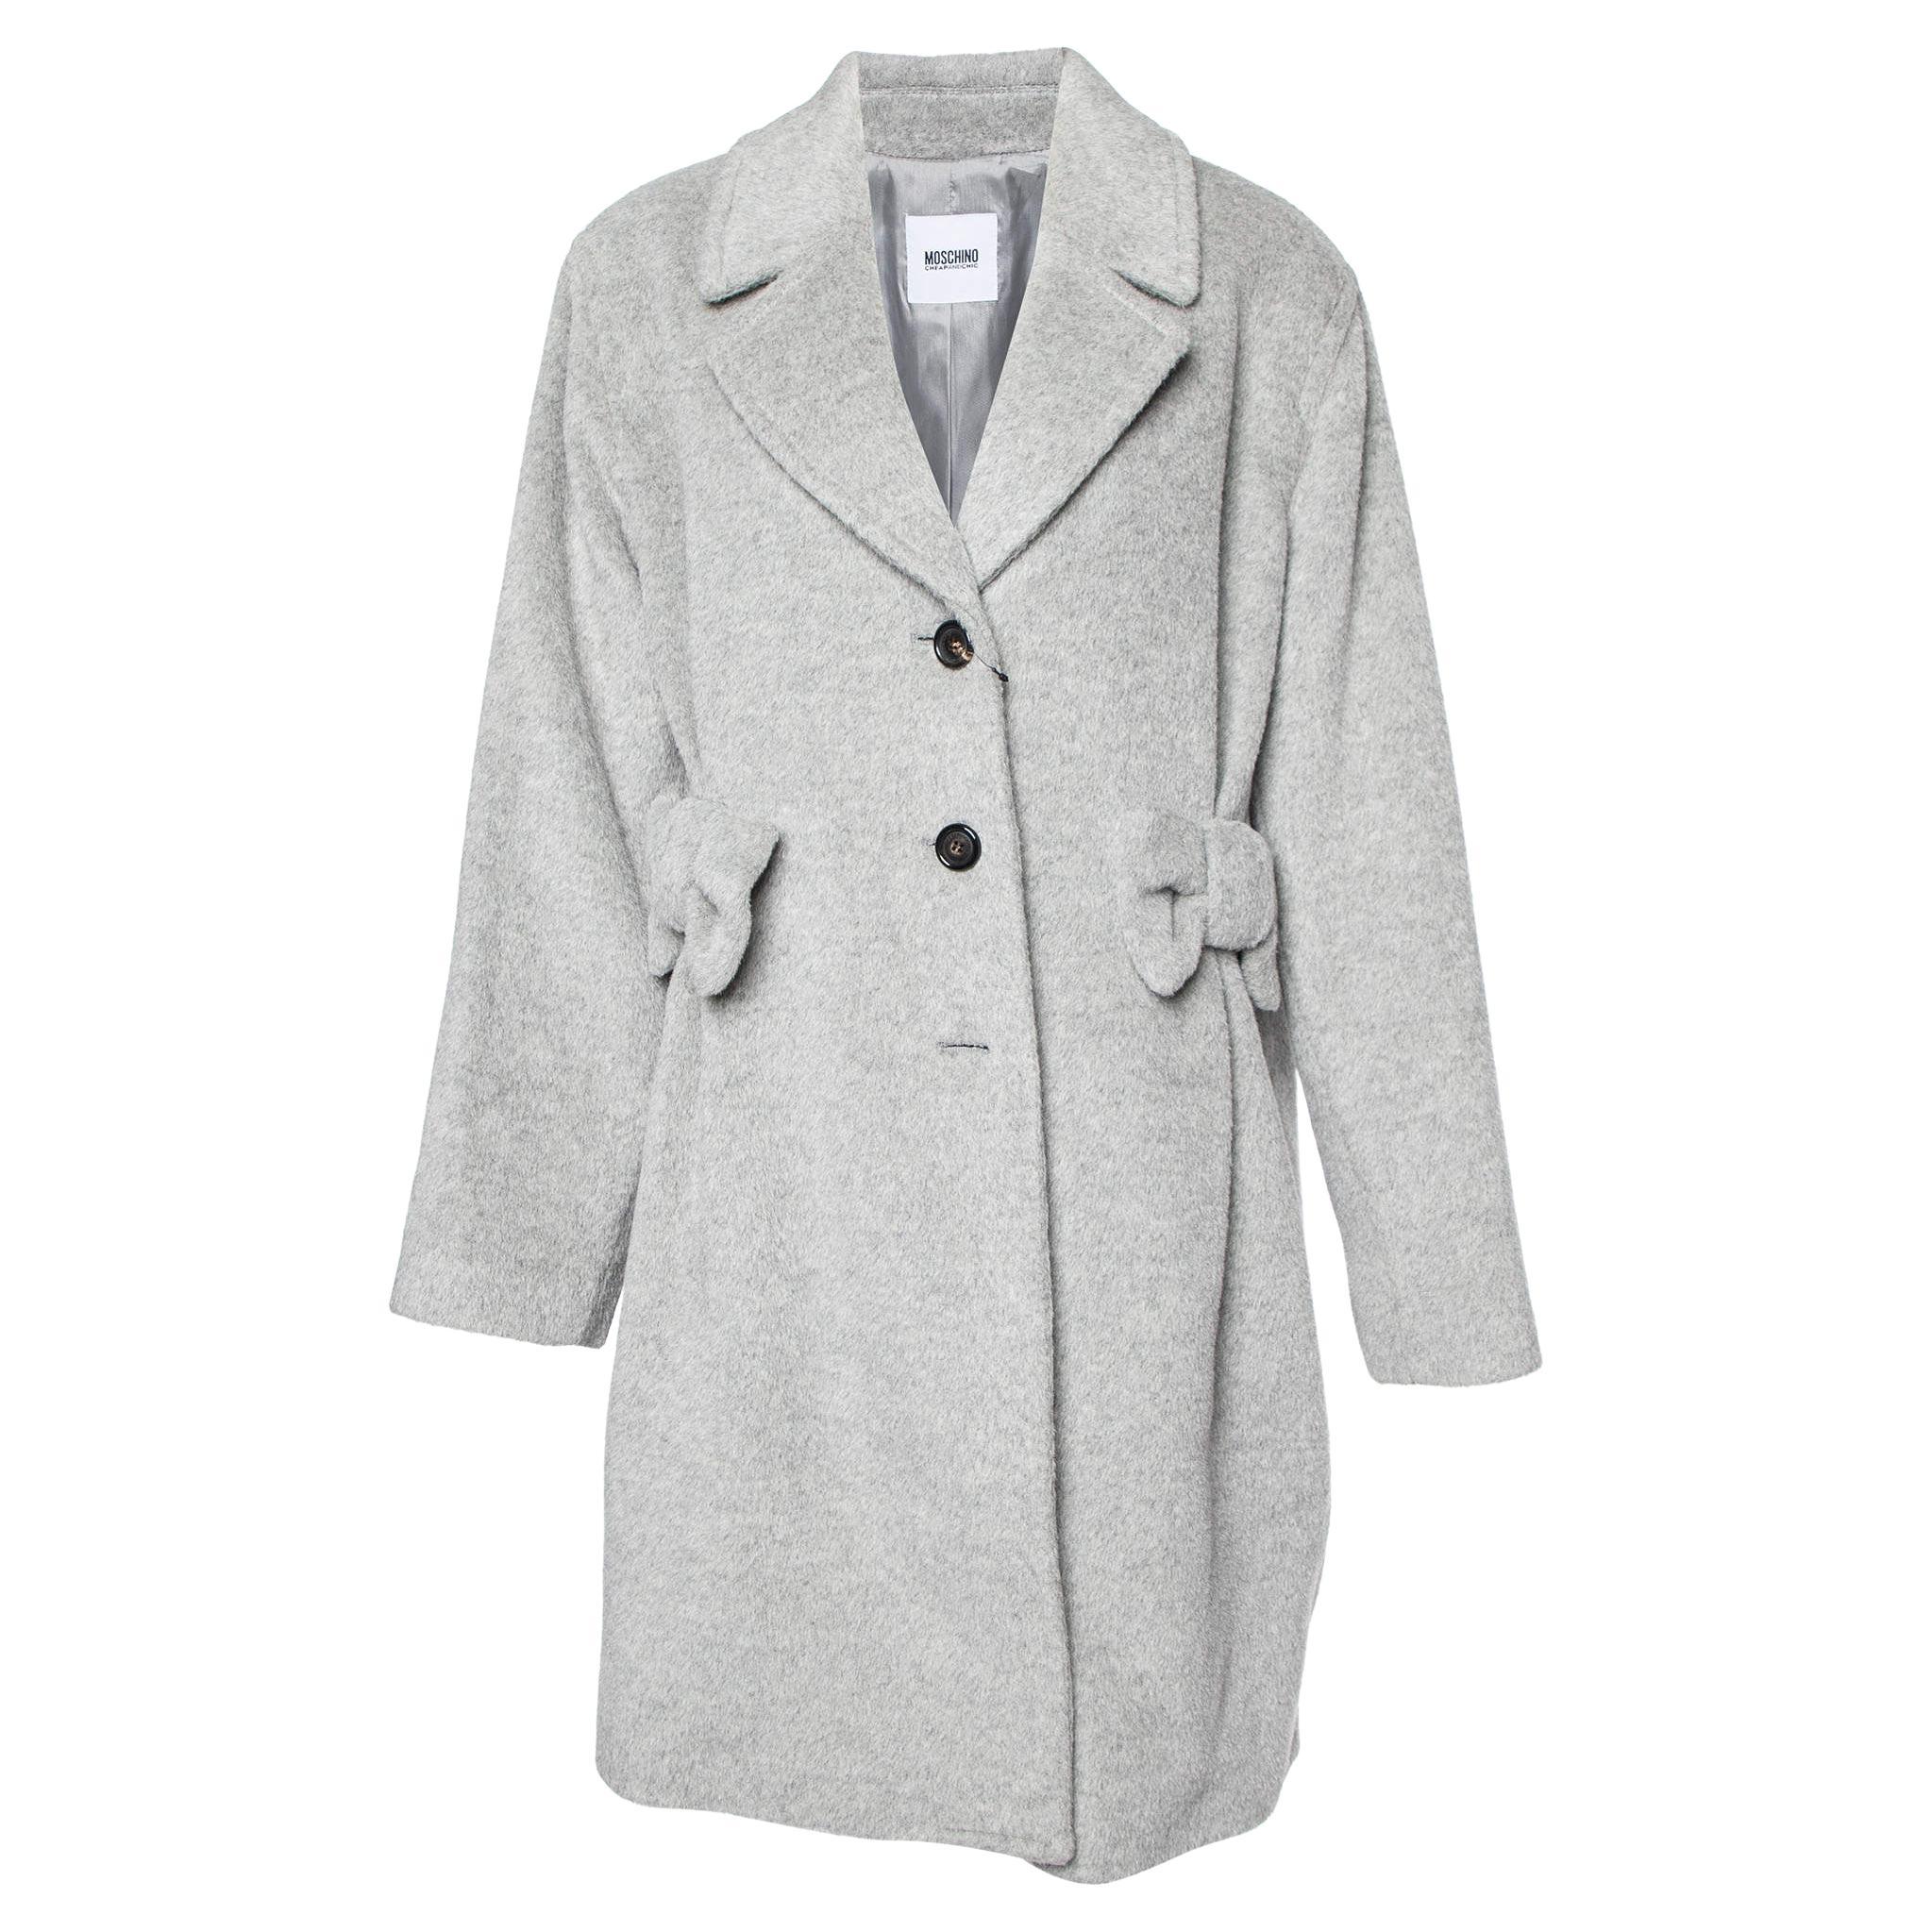 Manteau Moschino Cheap and Chic gris en laine d'alpaga avec nœud en vente